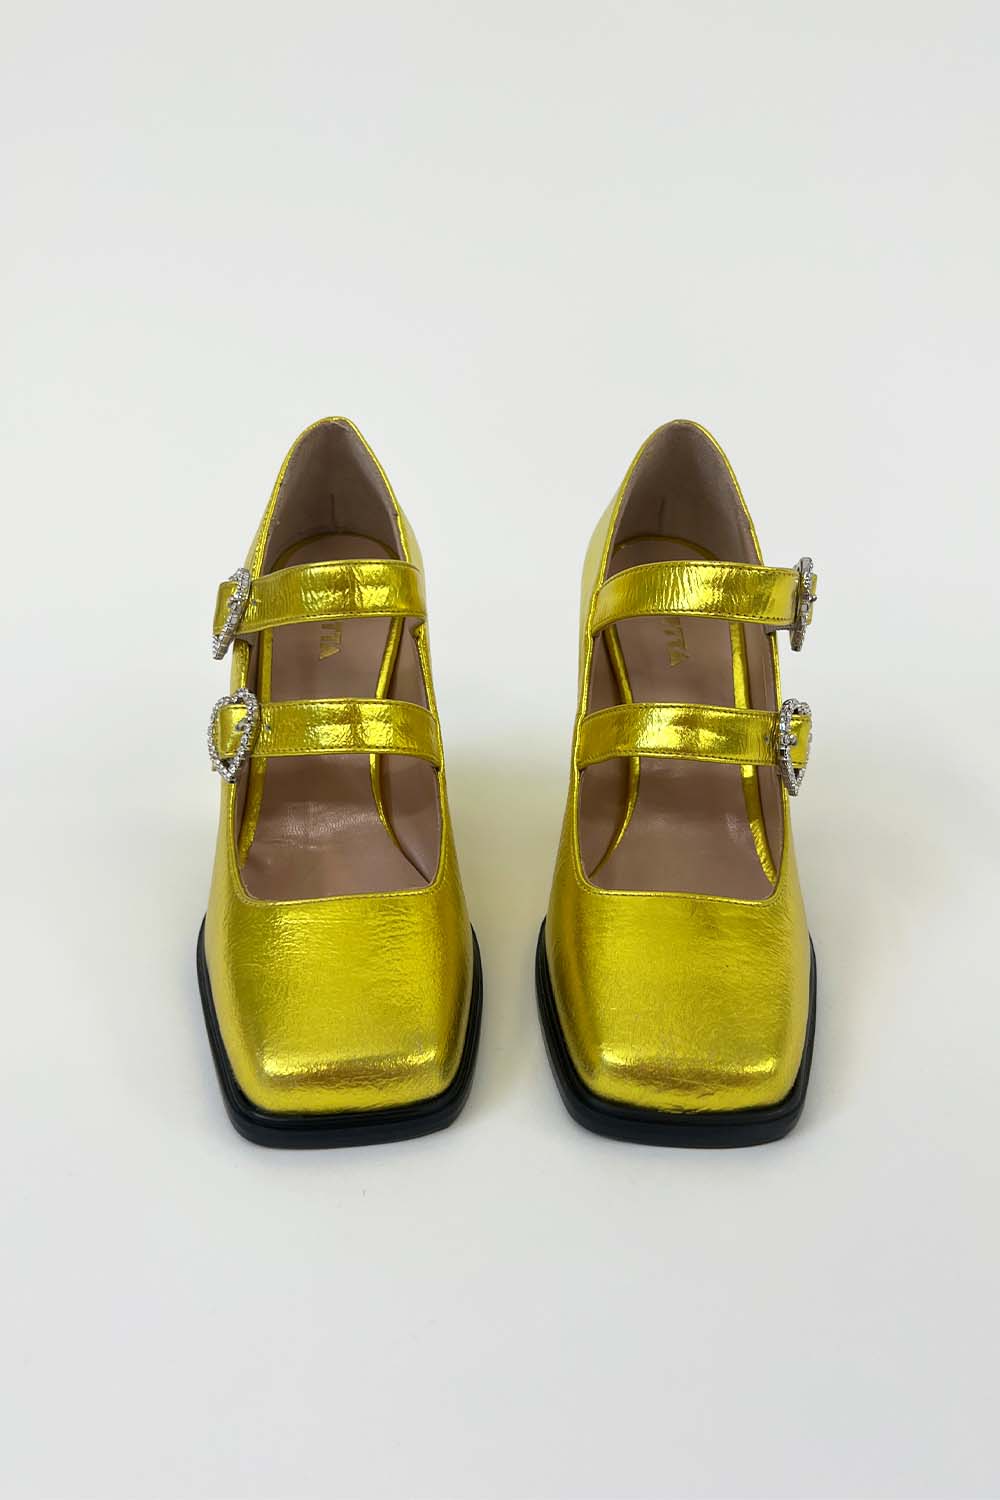 Vivetta - Moon Heels: Yellow